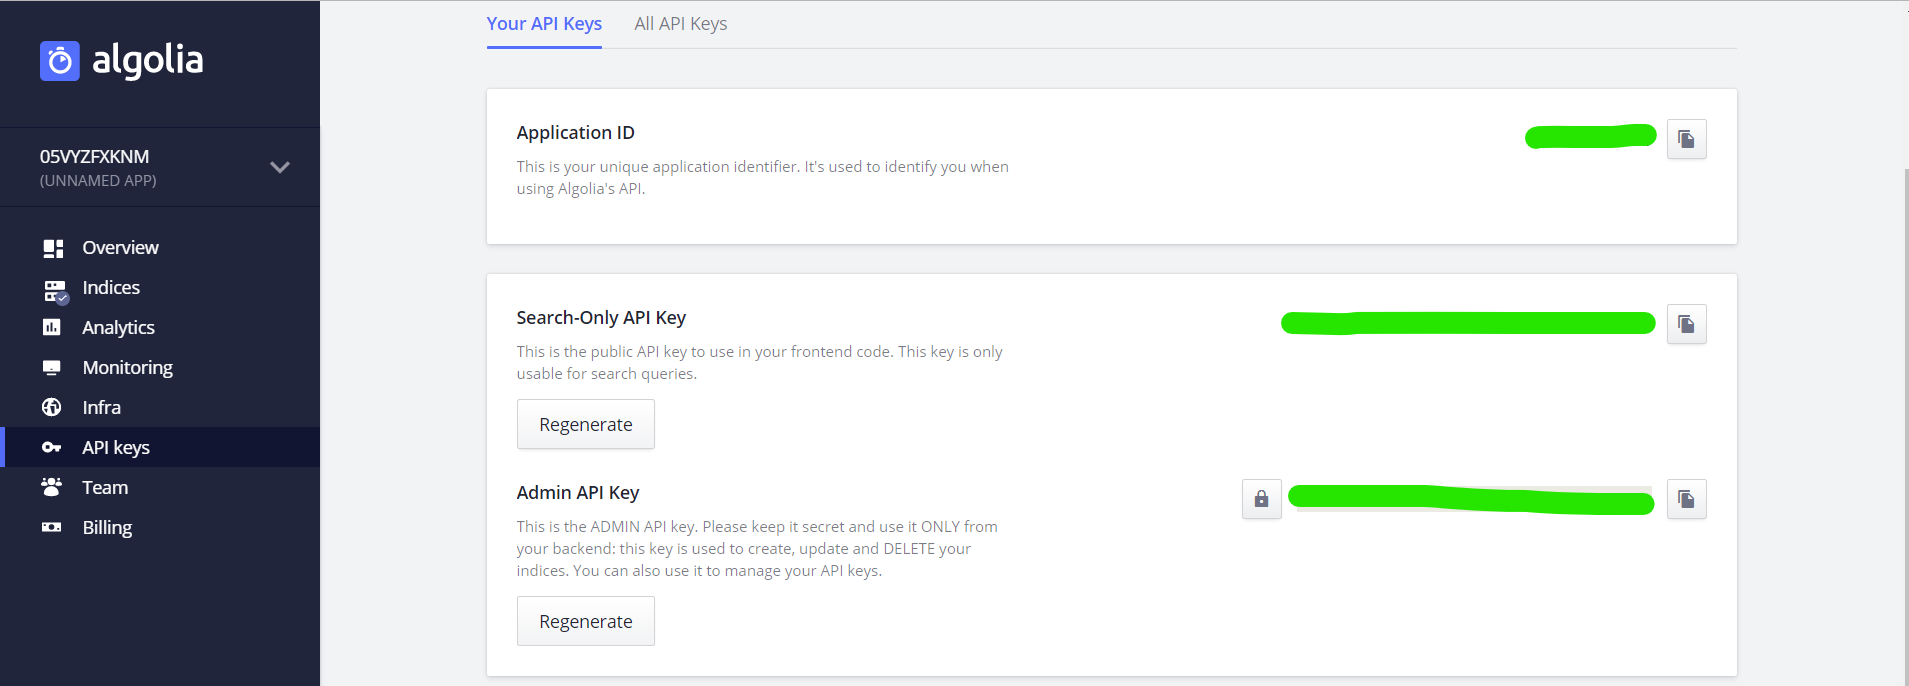 You need the Algolia App ID and Admin API Key